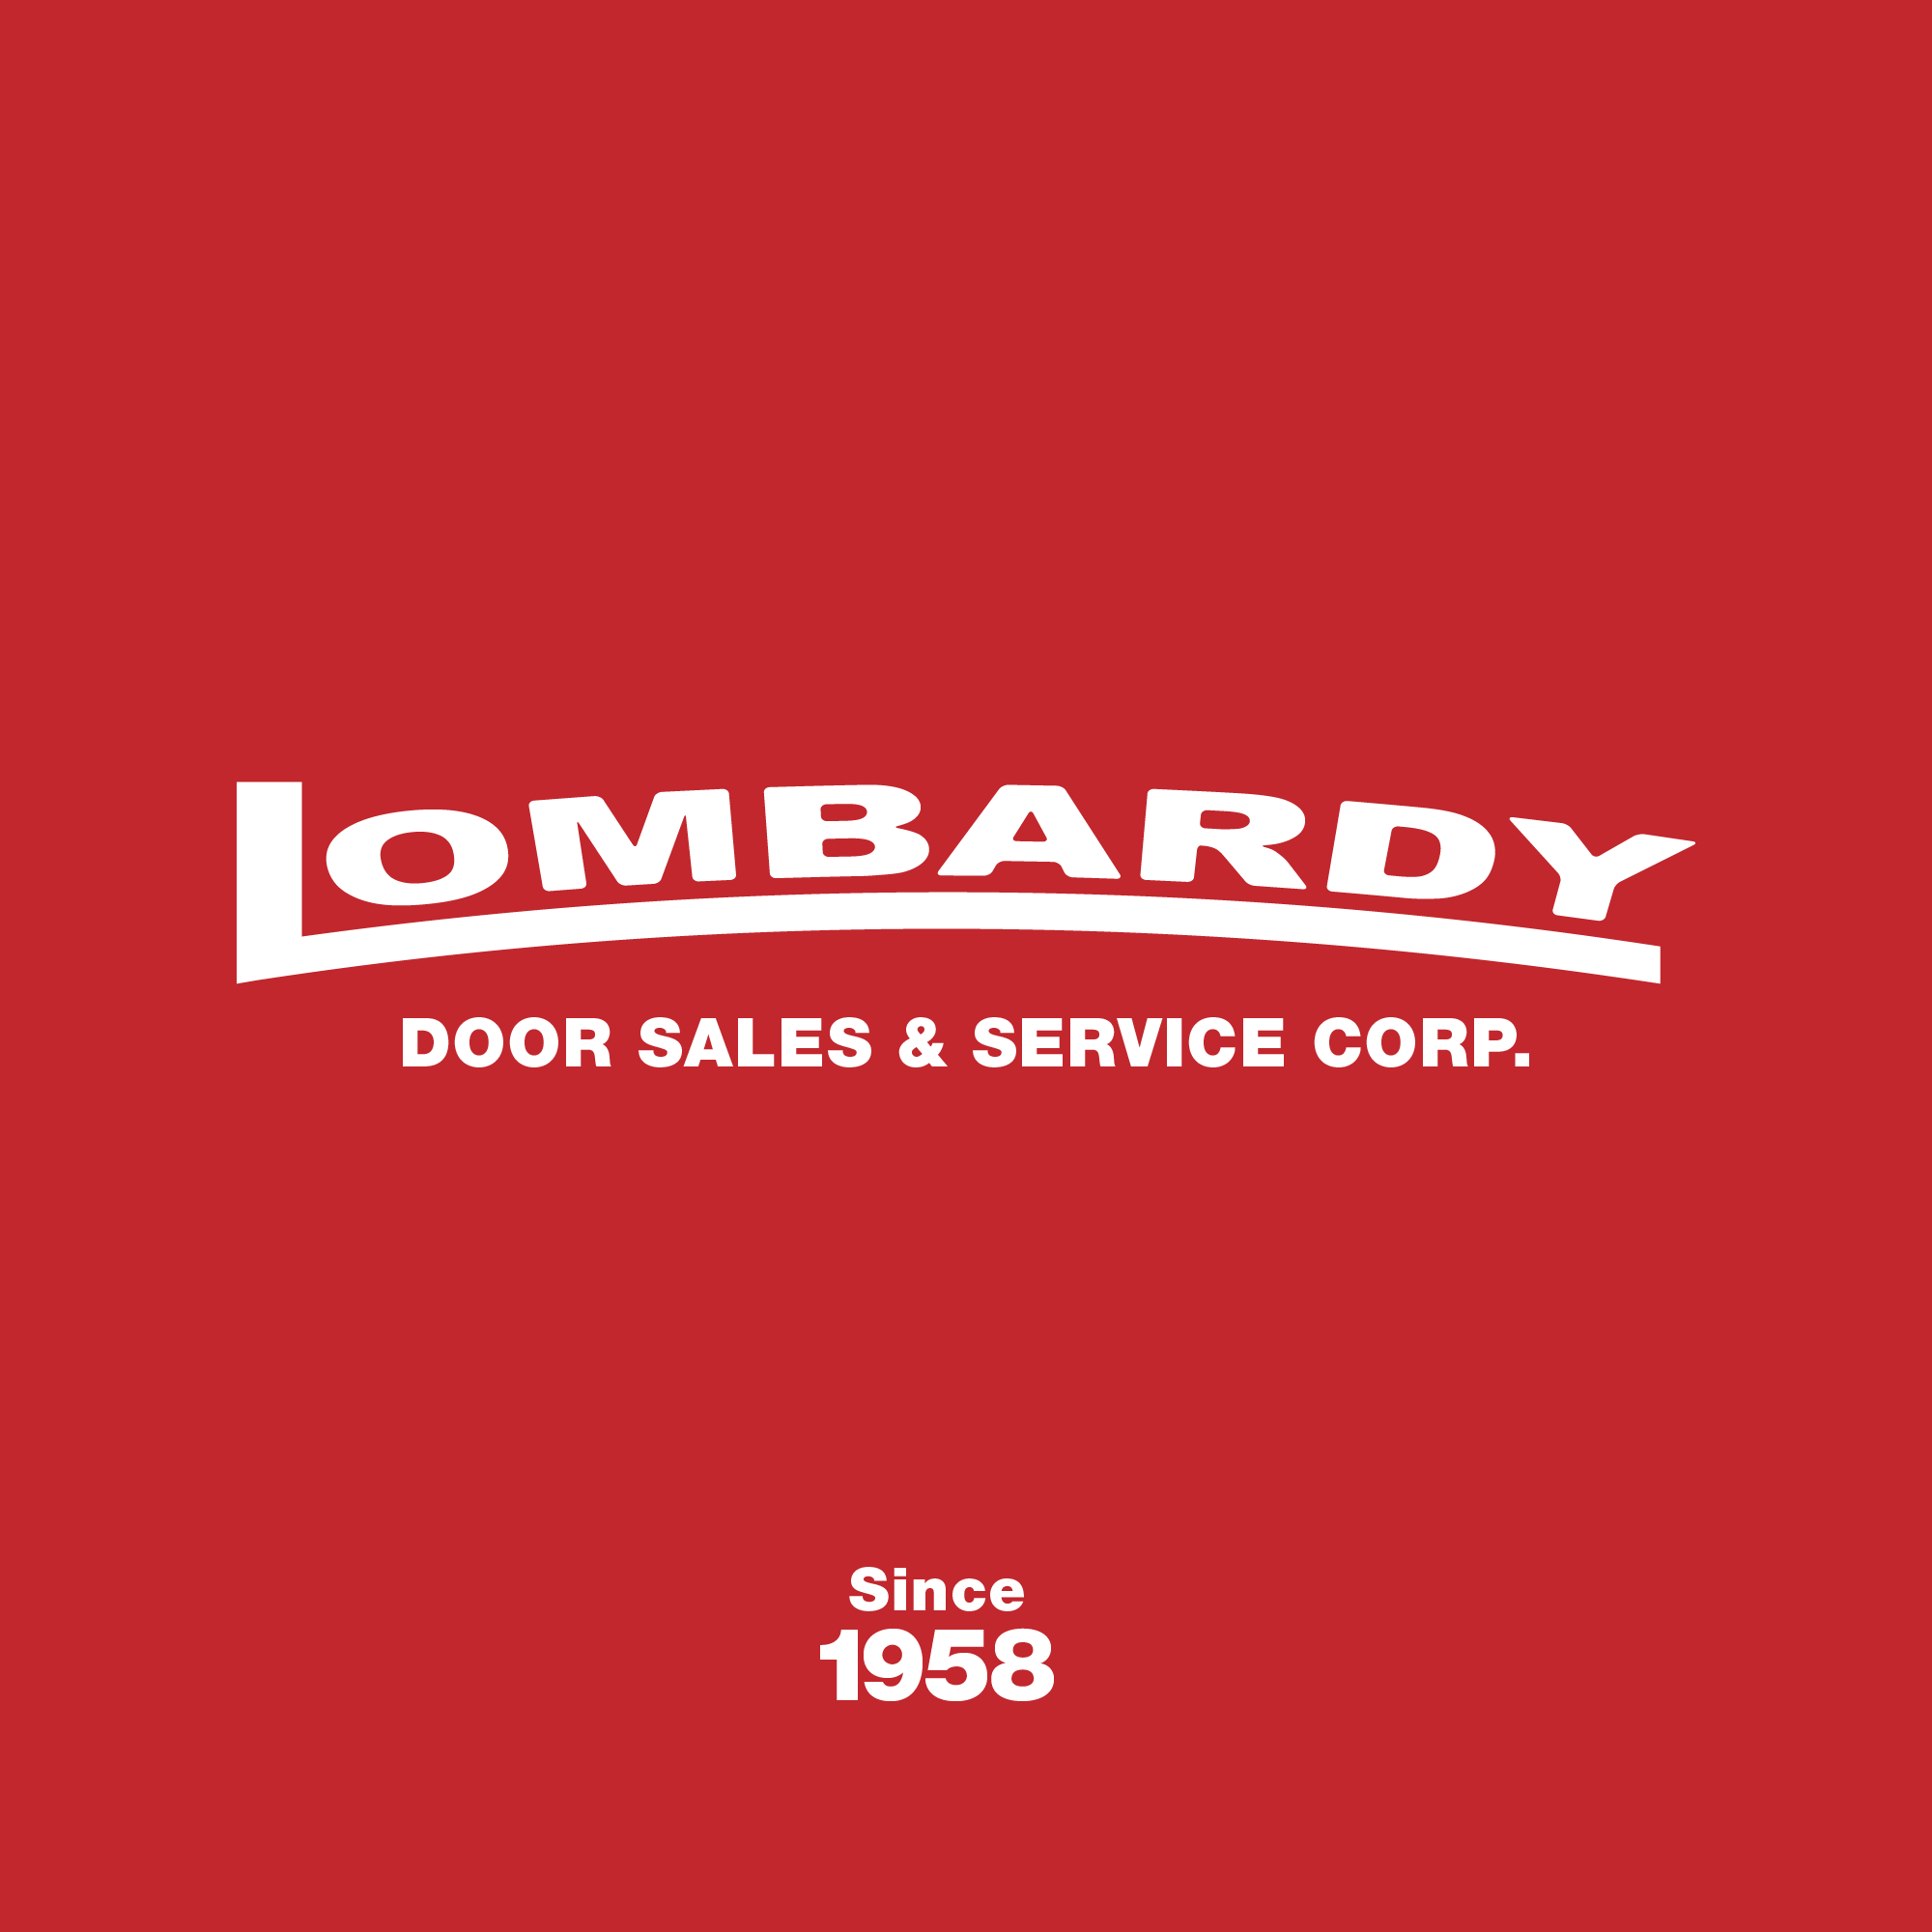 Lombardy Door Sales & Service Corp. Photo